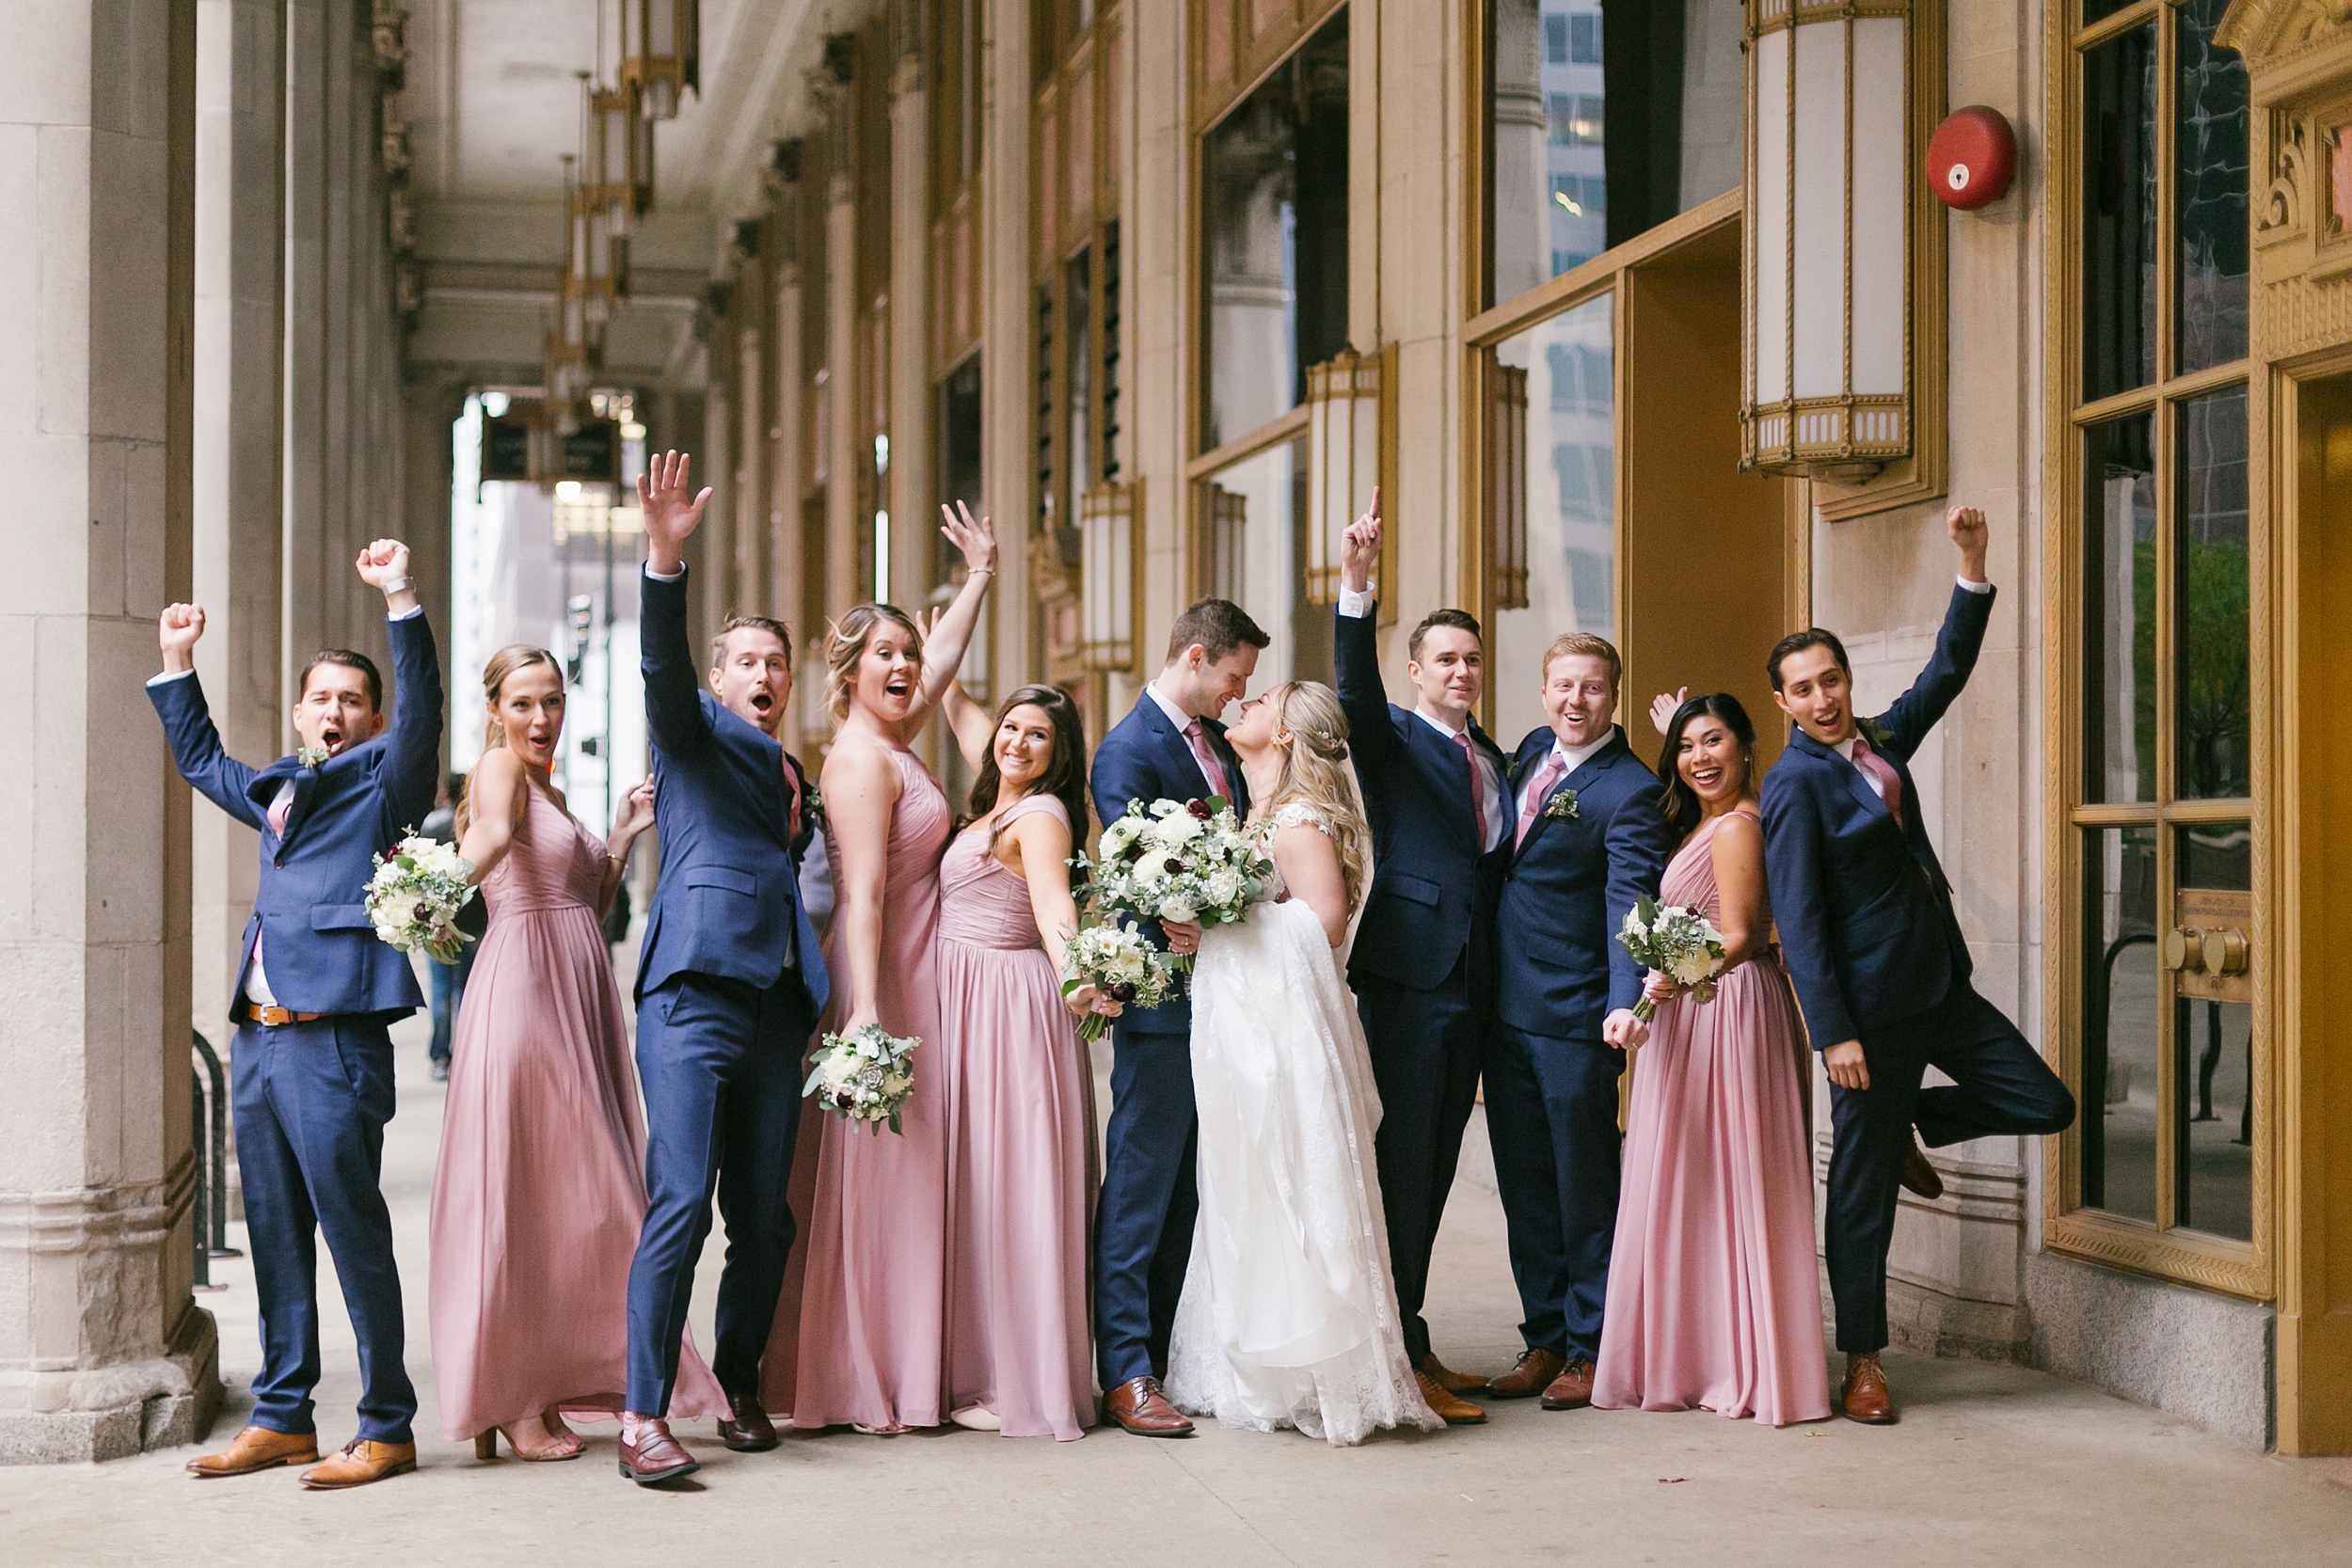 wedding party photos at chicago opera house